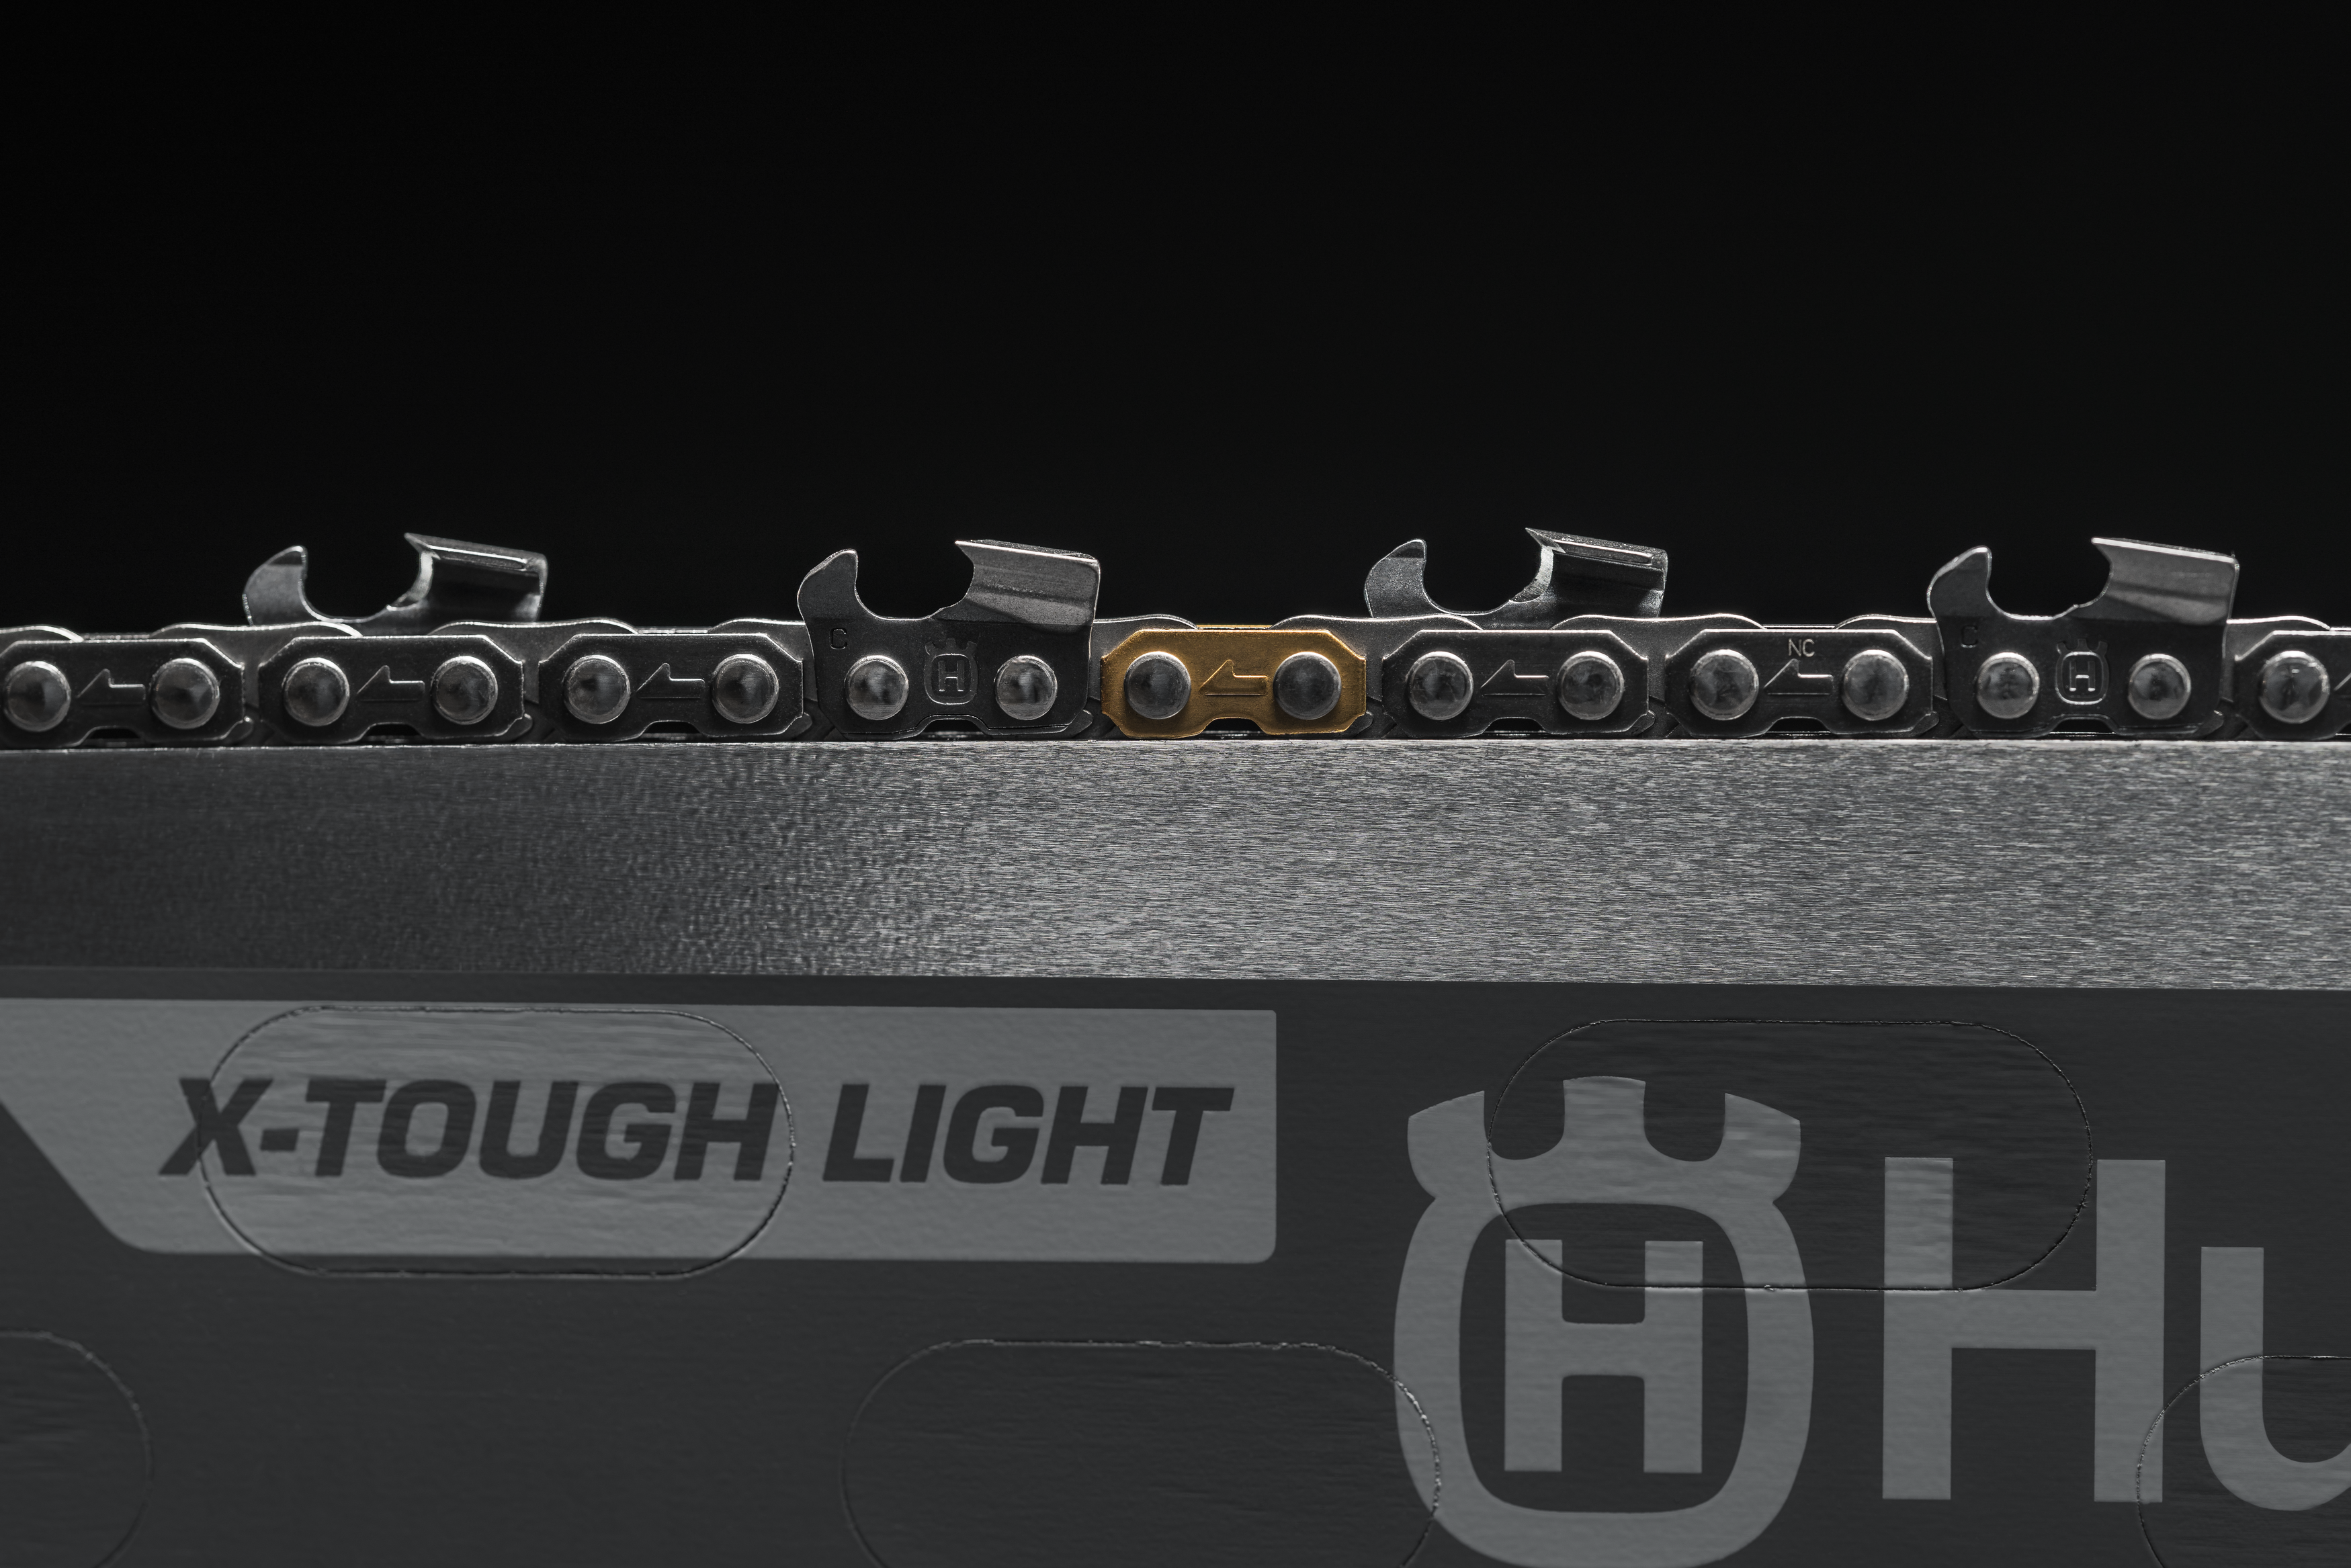 Husqvarna terälevy X-tough light 3/8" 1.5mm RSN iso sovite 28"